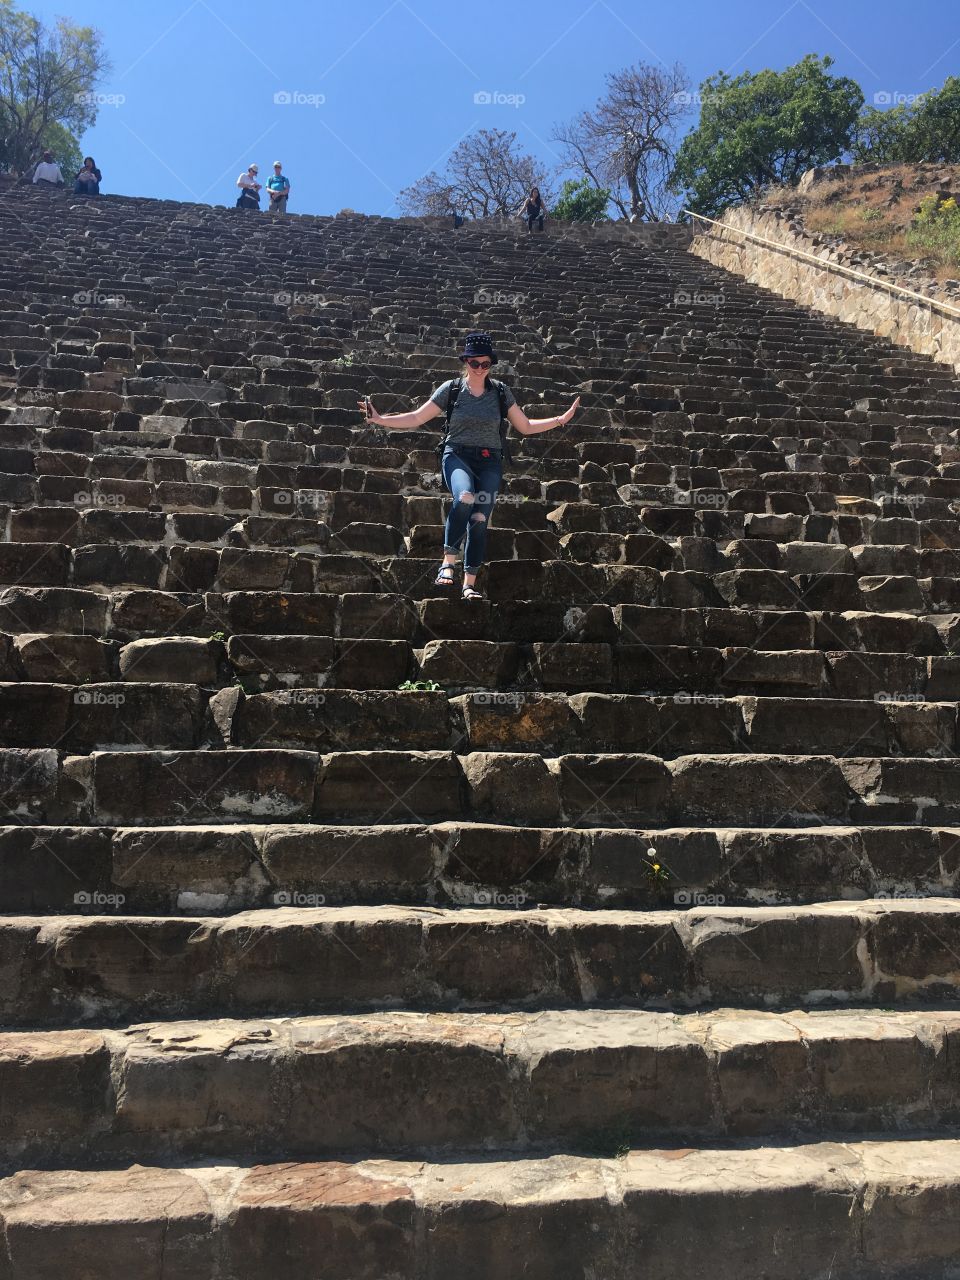 Descending the pyramids like the gods.
Monte Alban, Oaxaca